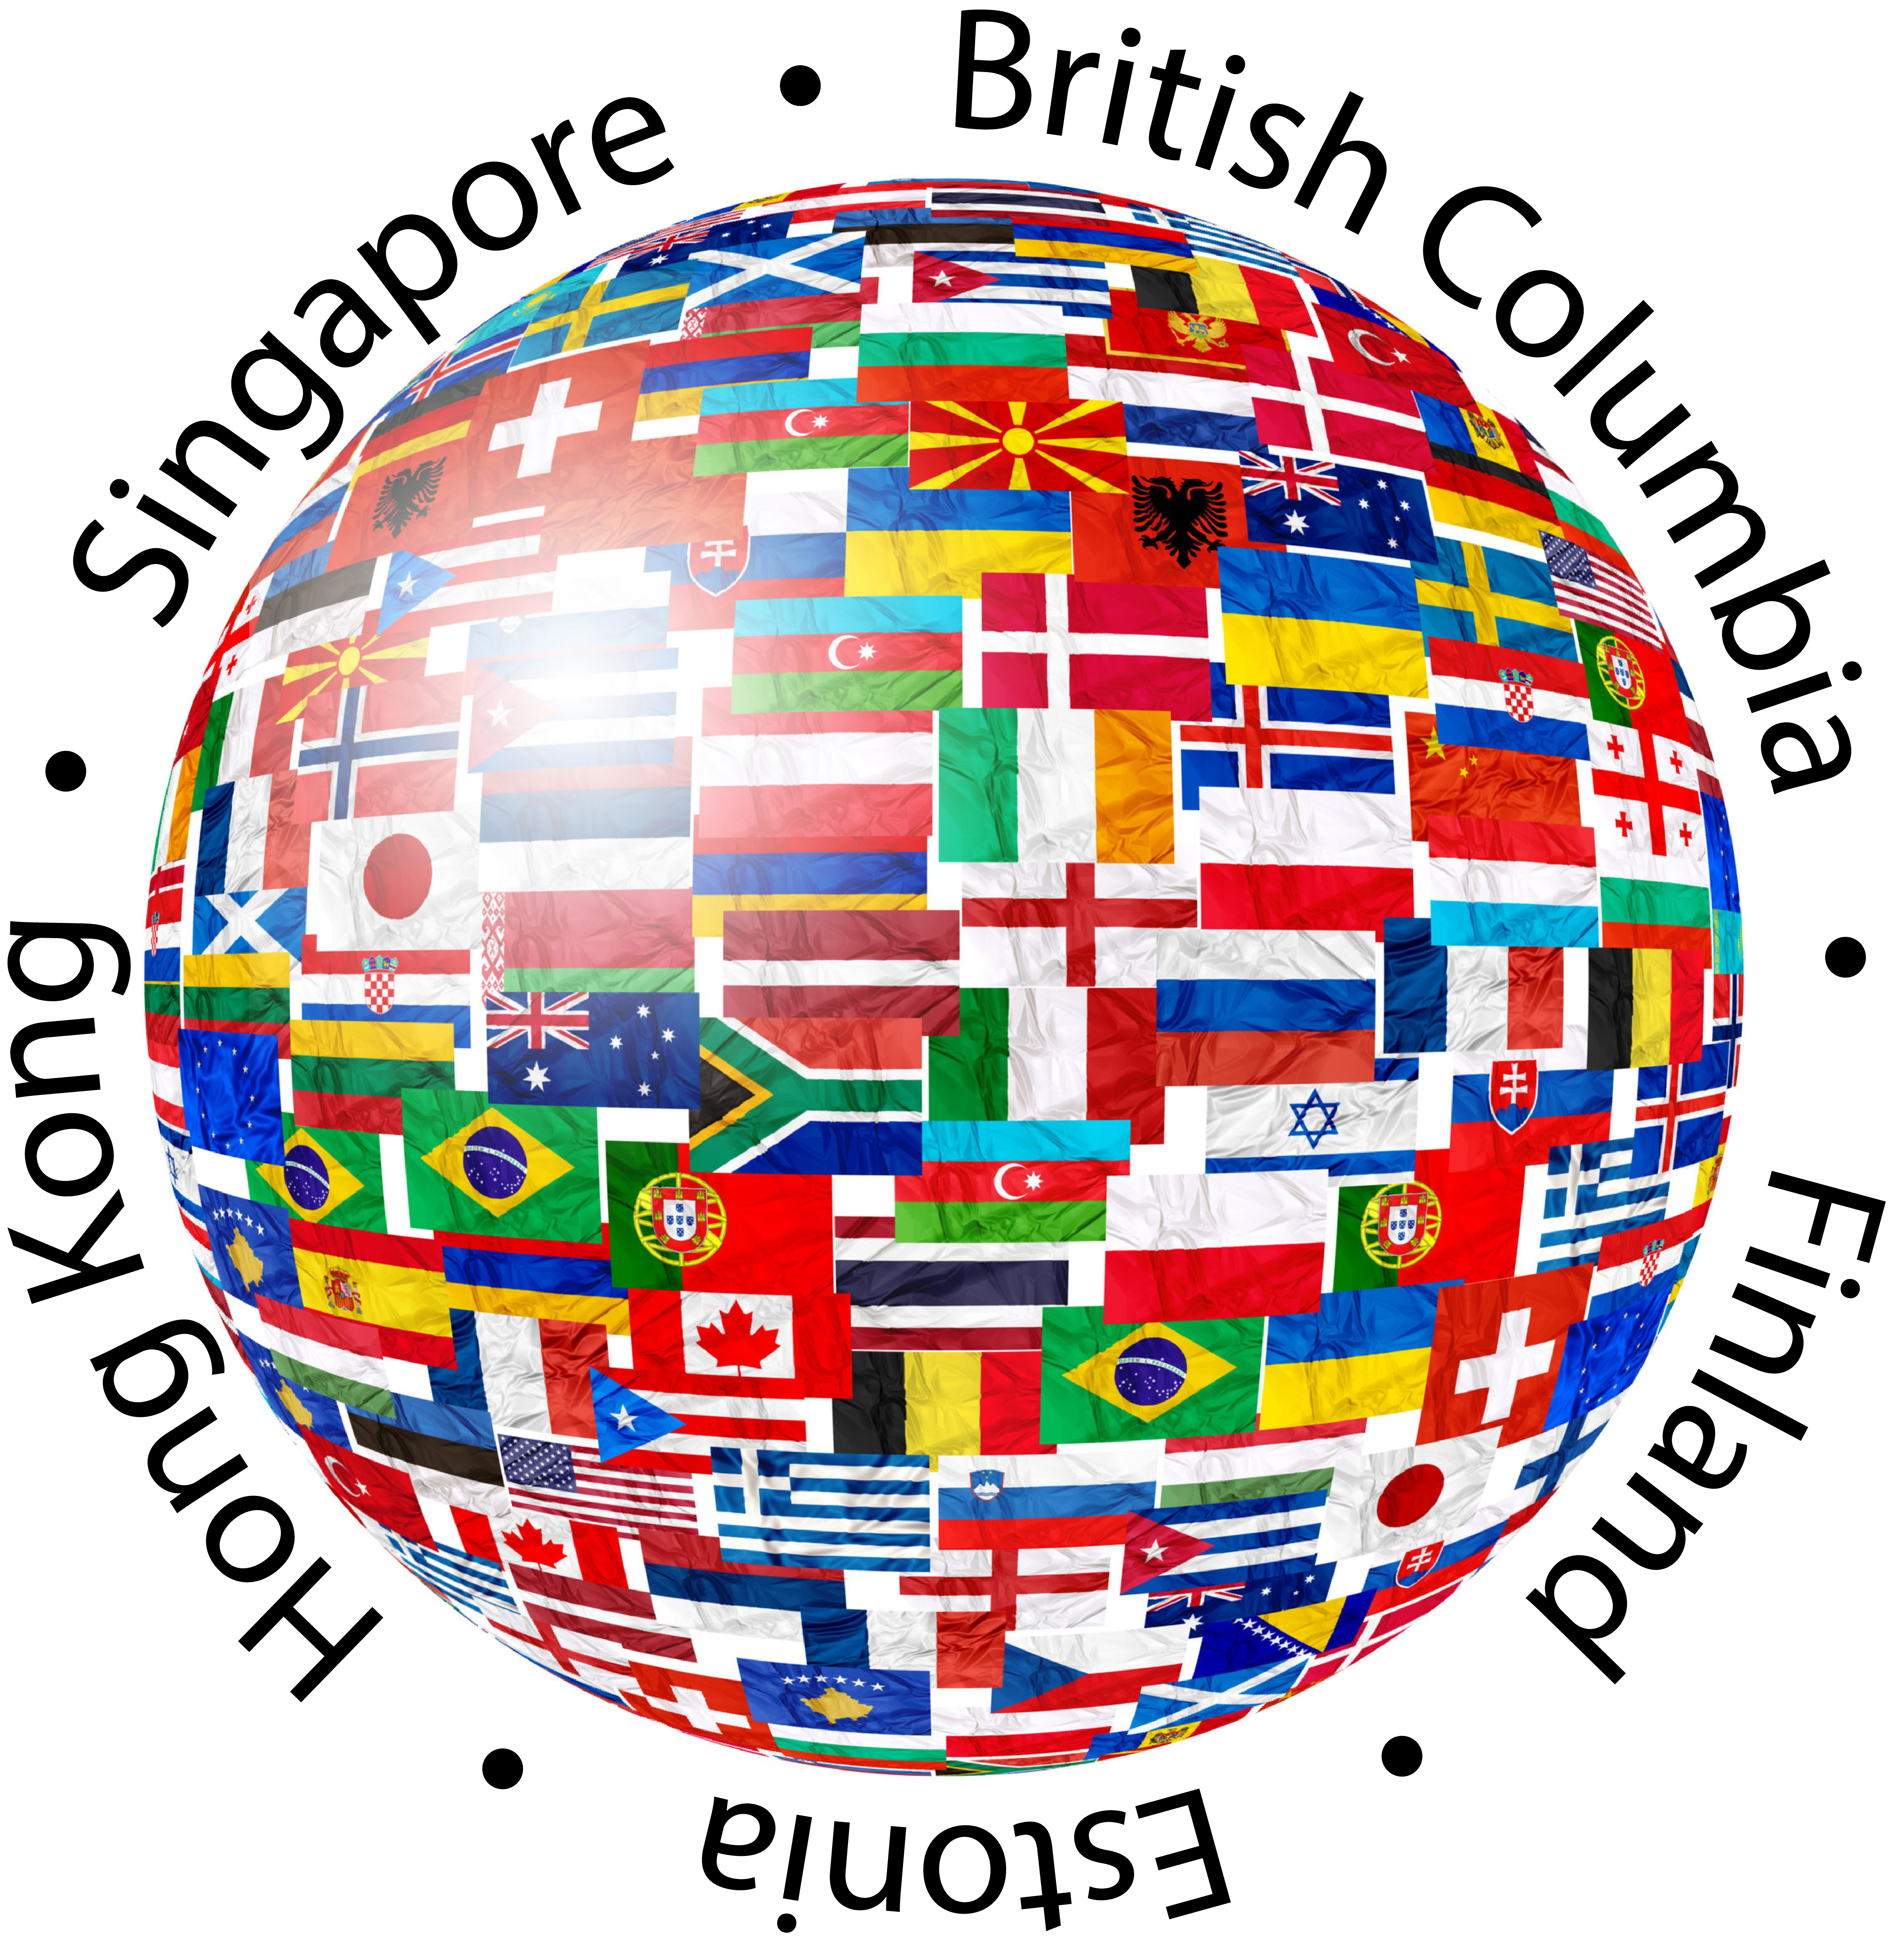 British Columbia, Finland, Estonia, Hong Kong, Singapore